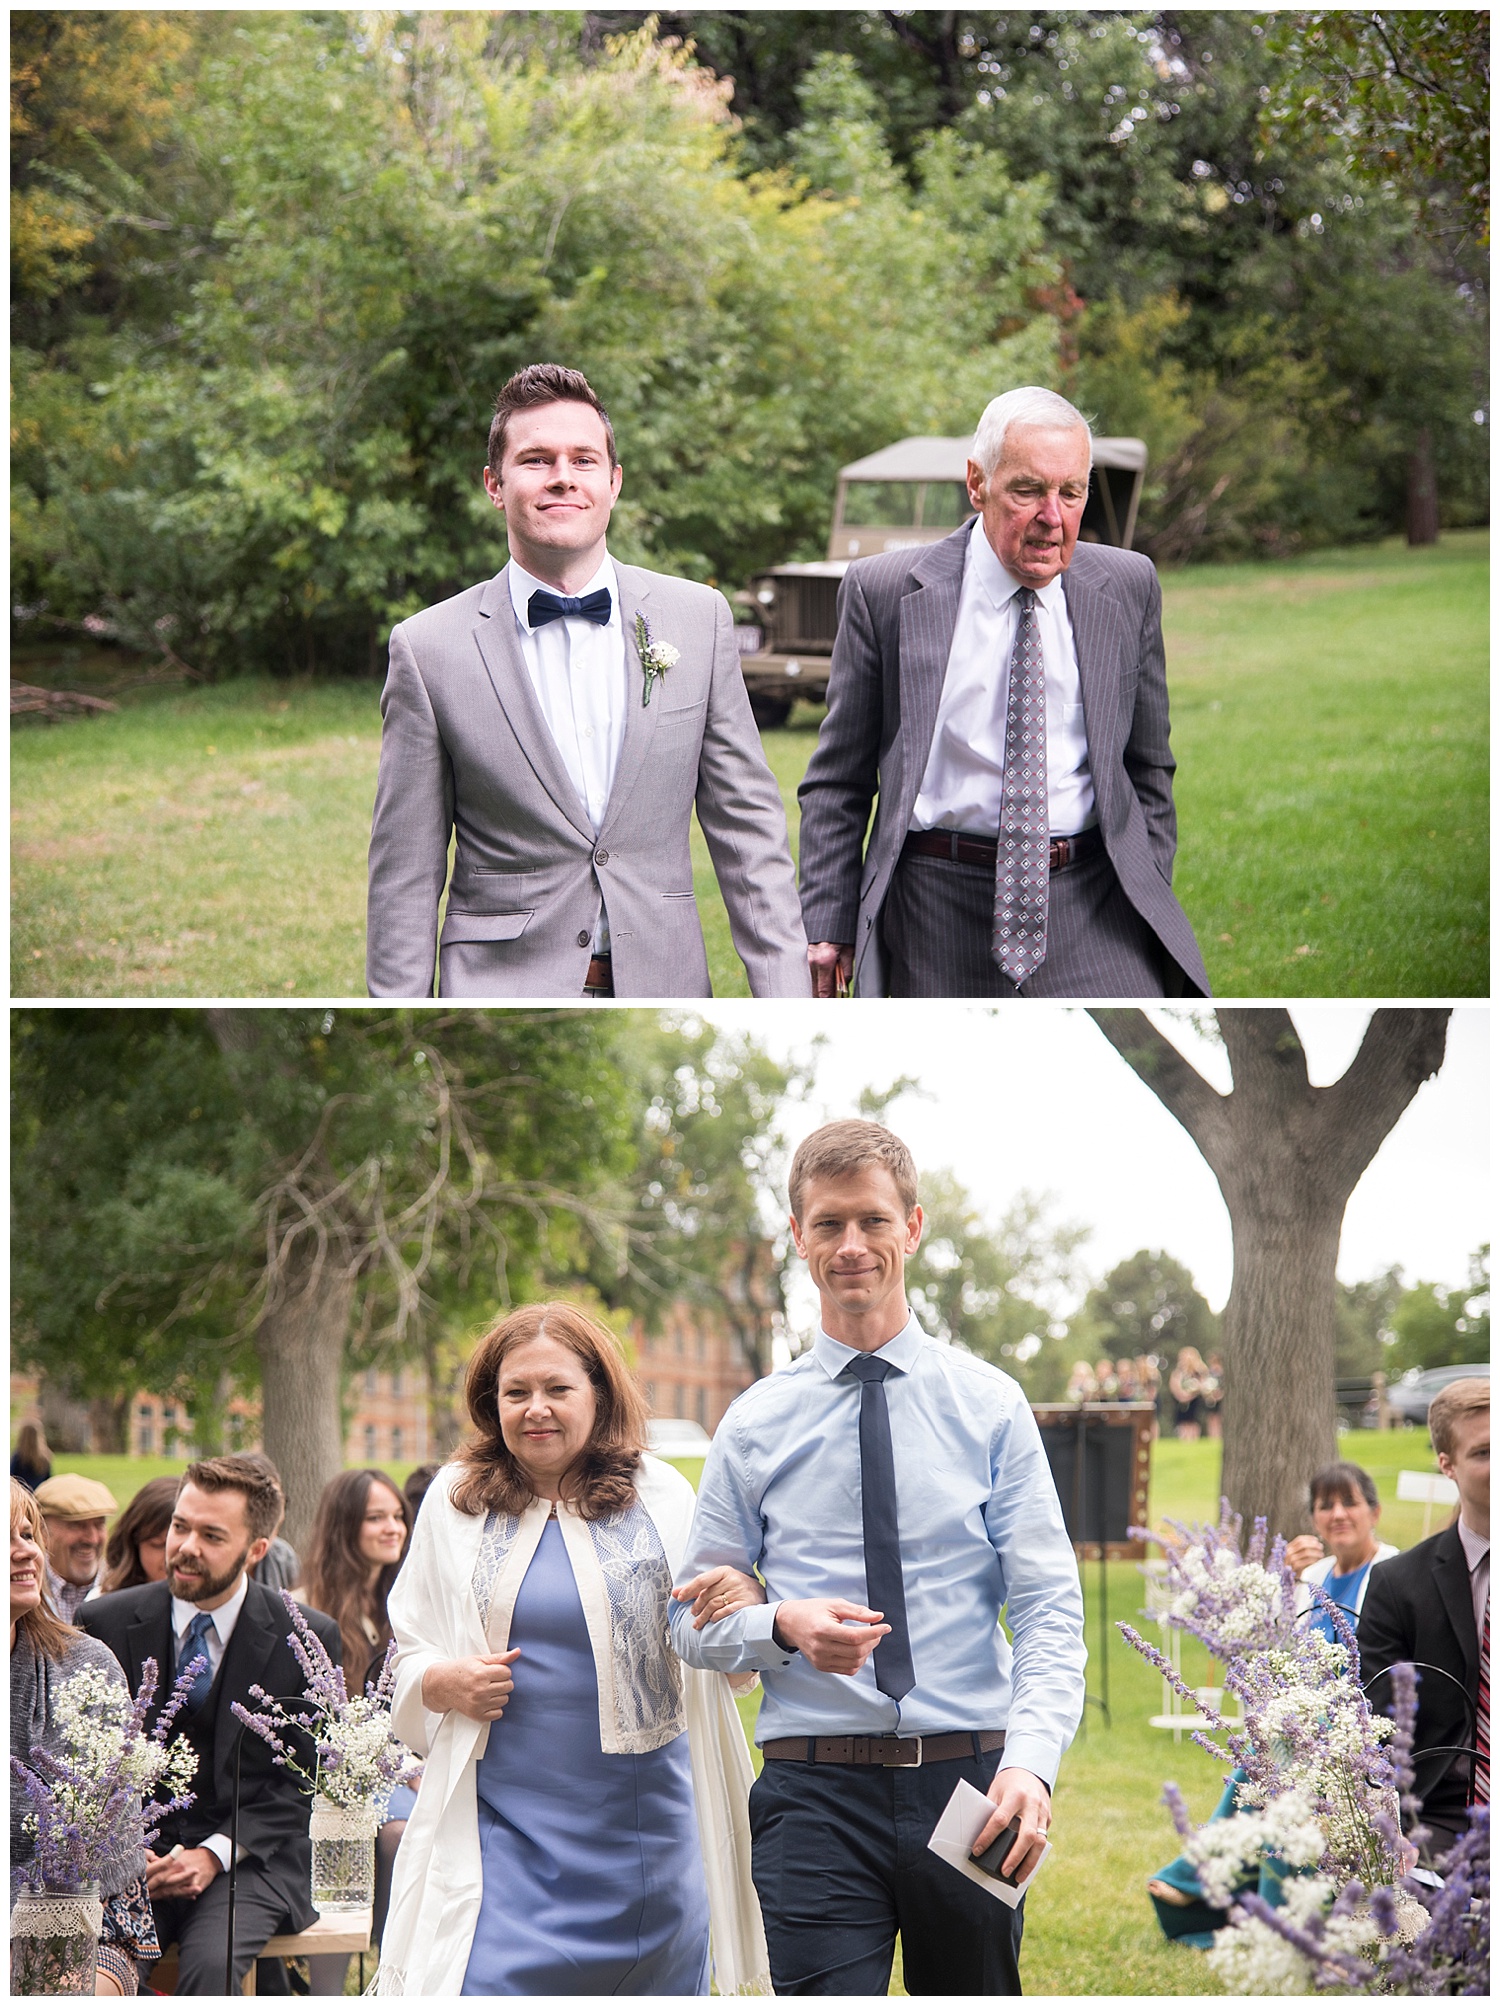 Cute Family Walking Down Aisle | Bethany and Jono's Intimate DIY Wedding | Colorado Springs Wedding Photographer | Farm Wedding Photographer | Apollo Fields Wedding Photojournalism